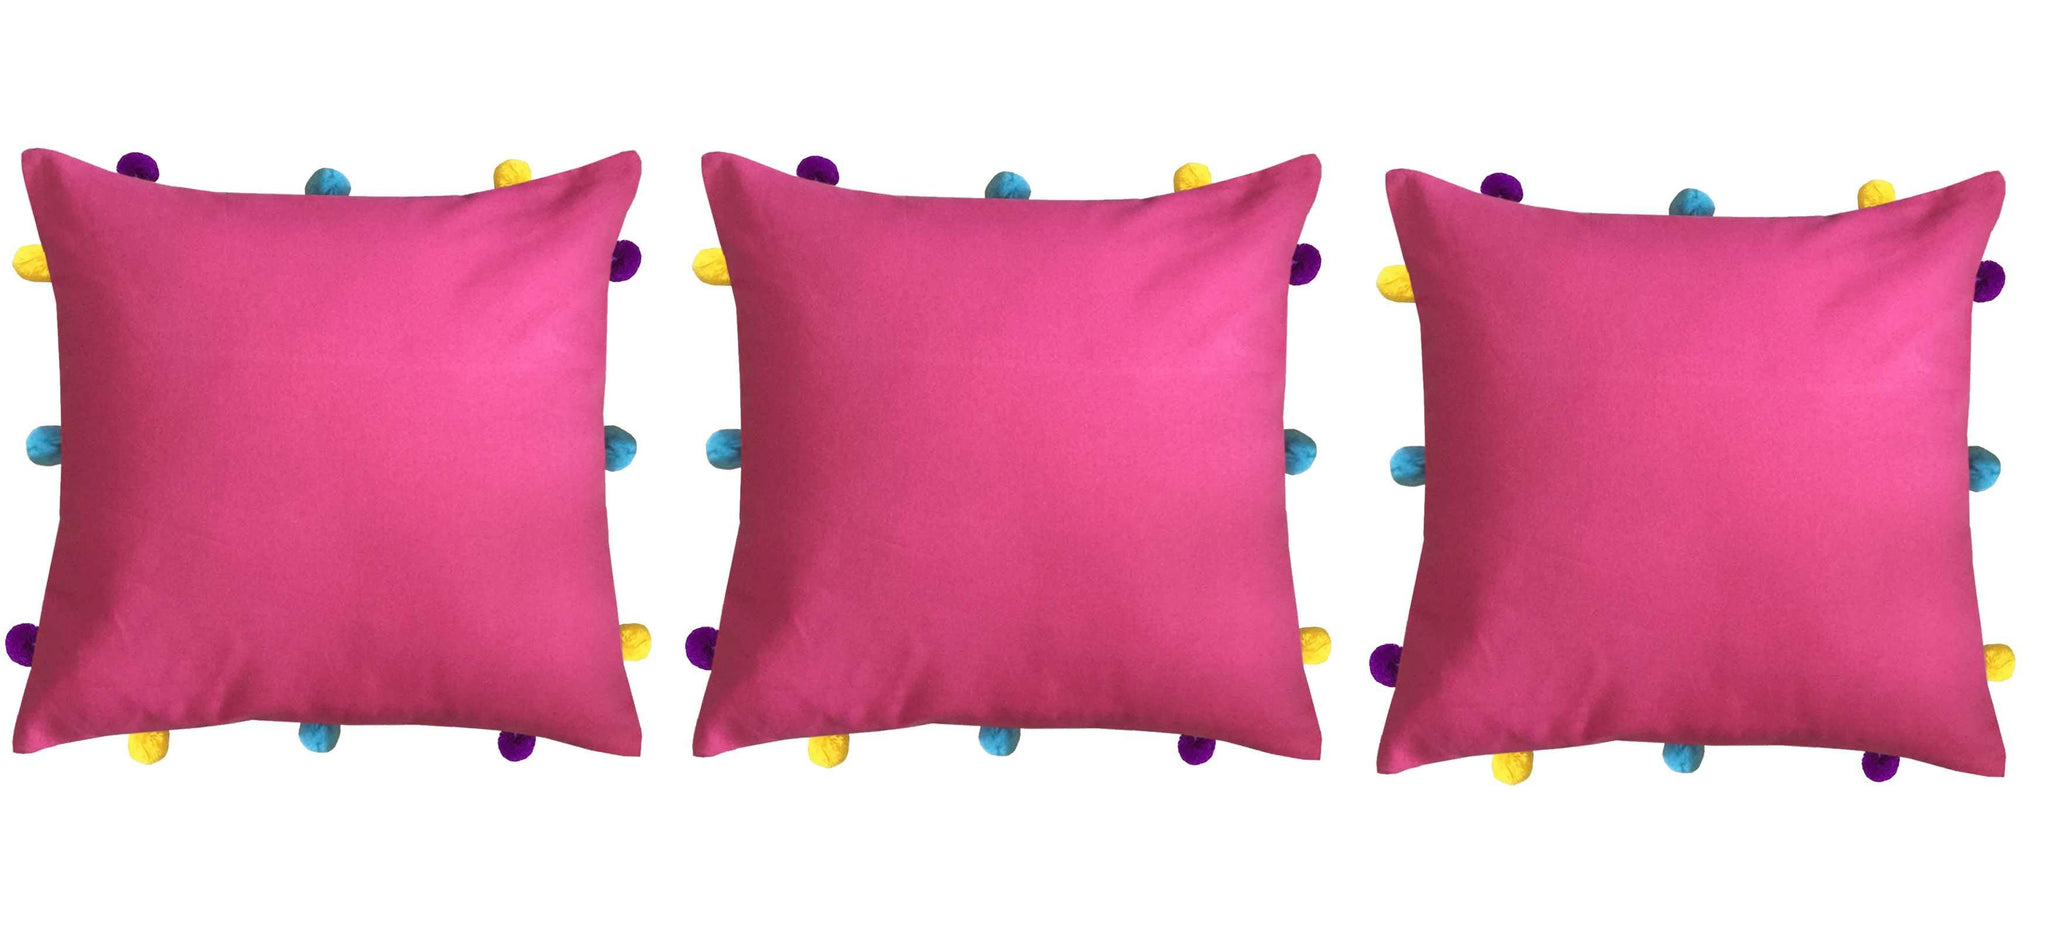 Lushomes Rasberry Cushion Cover with Colorful pom poms (3 pcs, 12 x 12”) - Lushomes